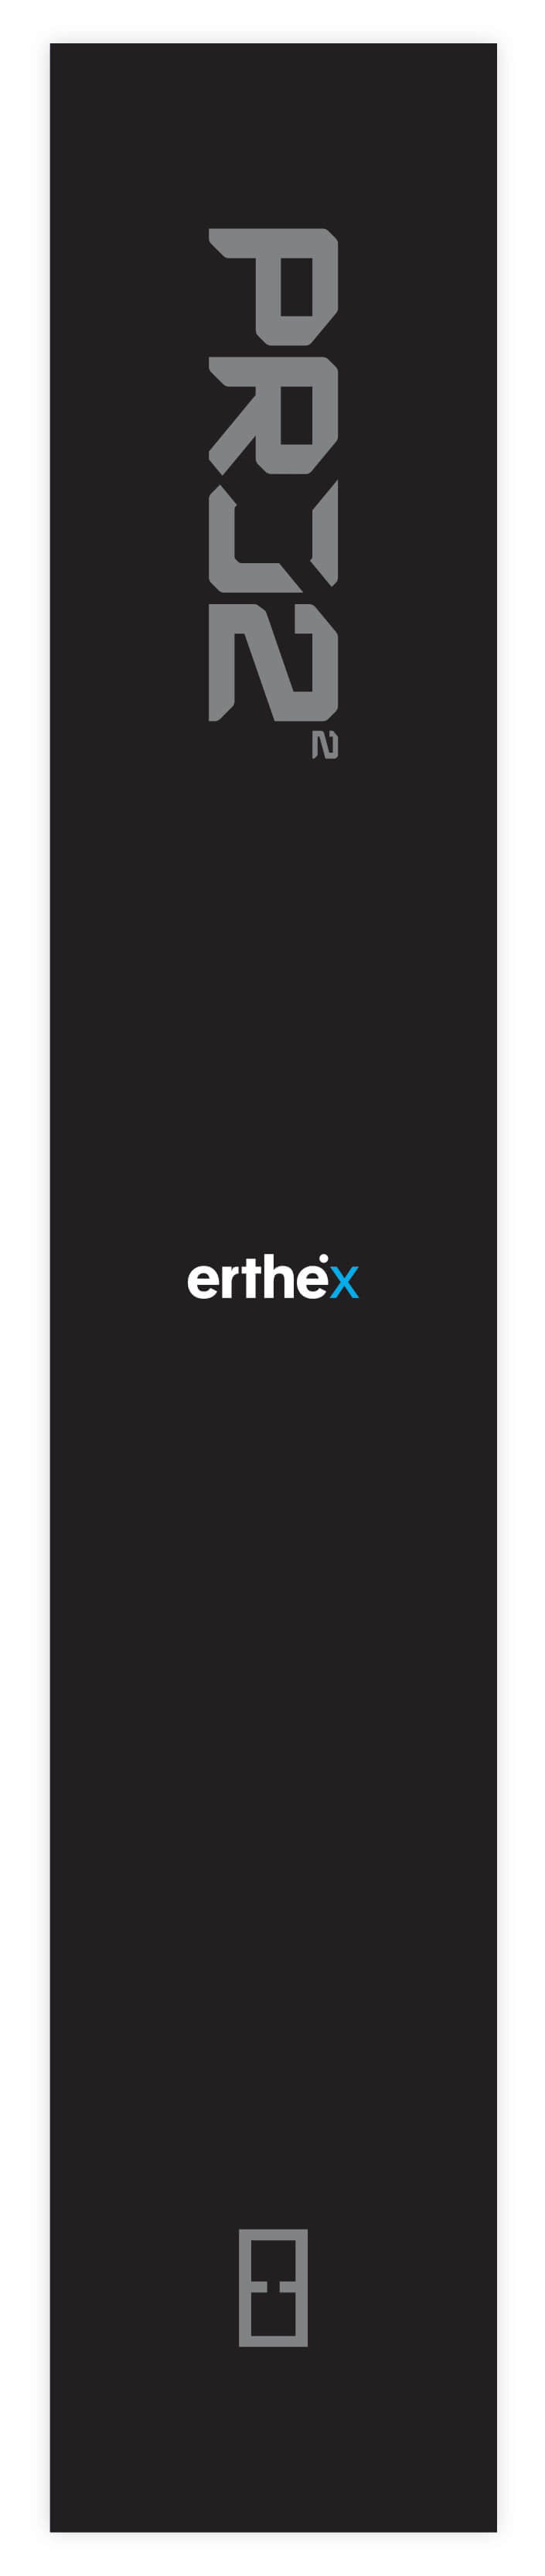 Earthing Shoe straps - Earthling 3.0 by erthe369 - Make any footwear Earthing footwear - PAIR - GroundedKiwi.nz